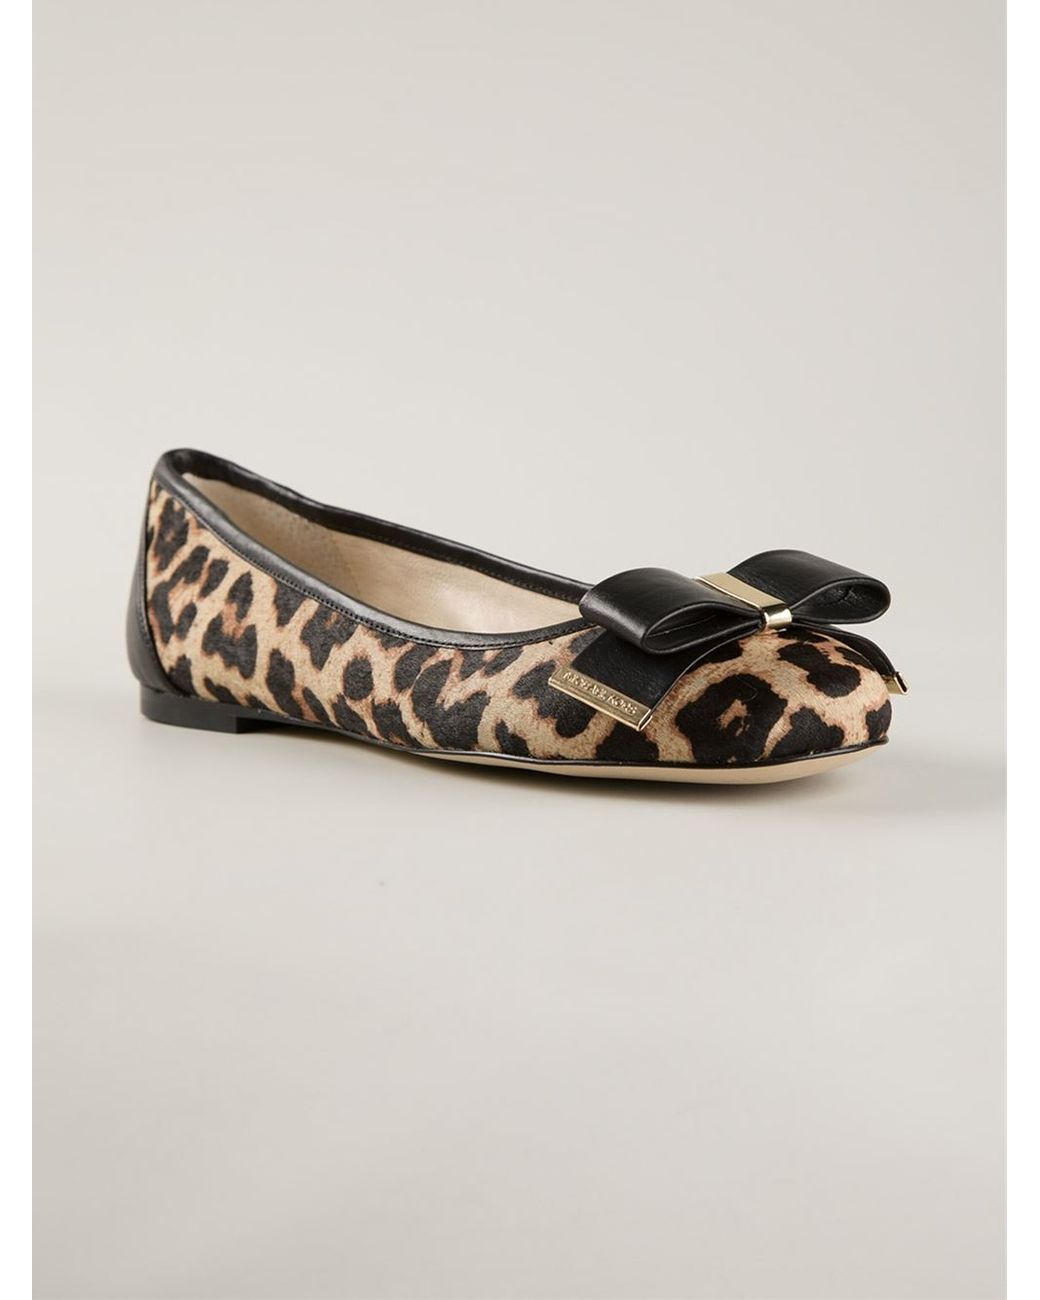 Michael Kors Leopard Shoes  eBay